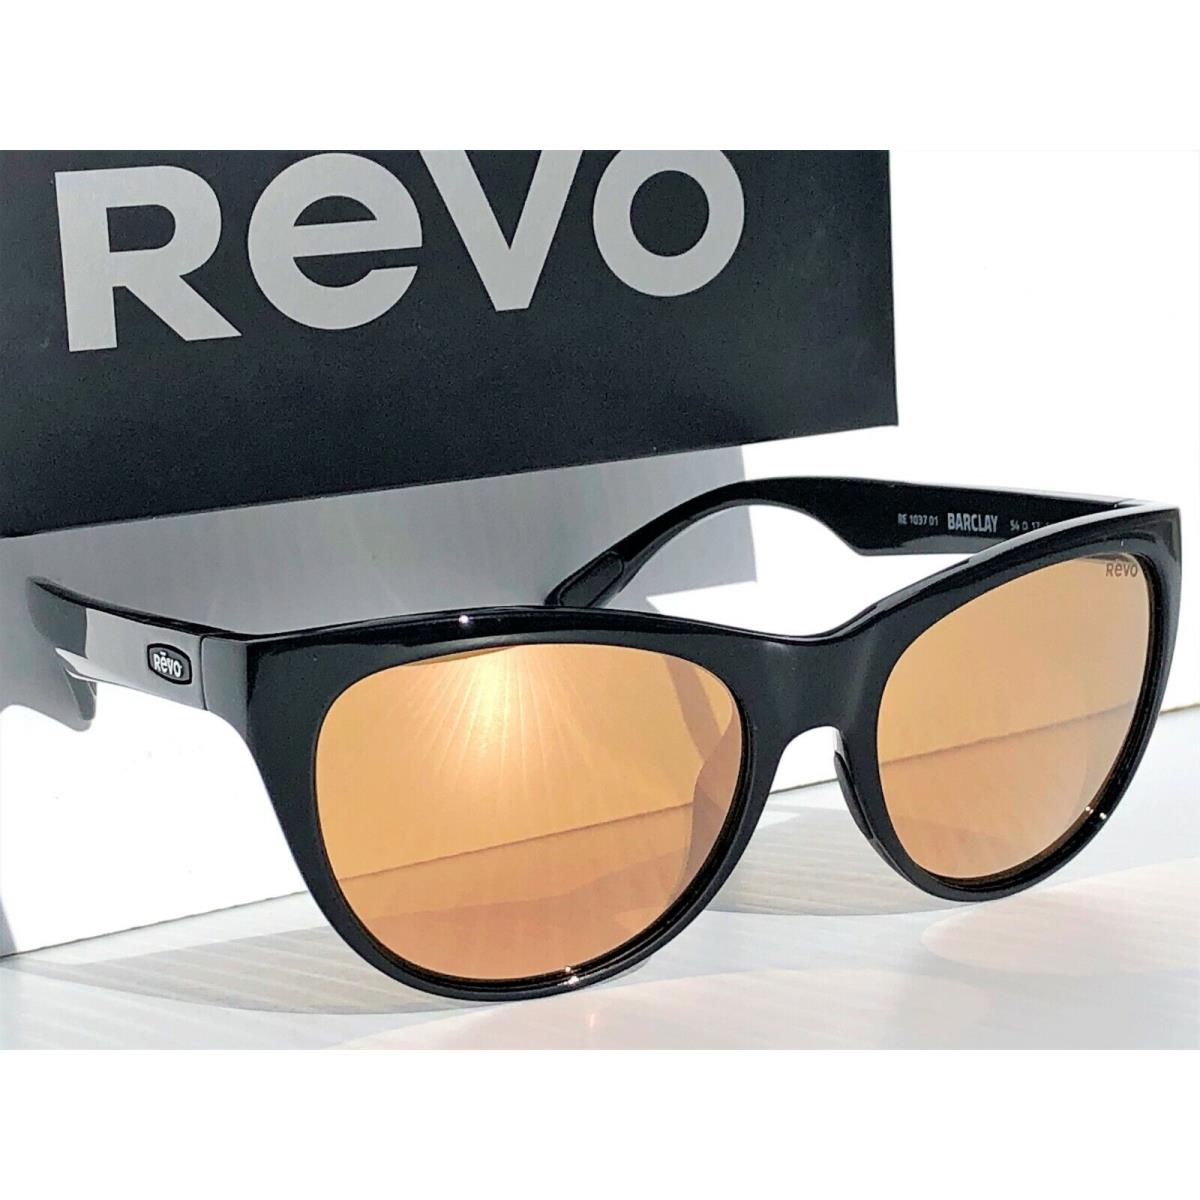 Revo sunglasses BARCLAY - Black Frame, Champaign Lens